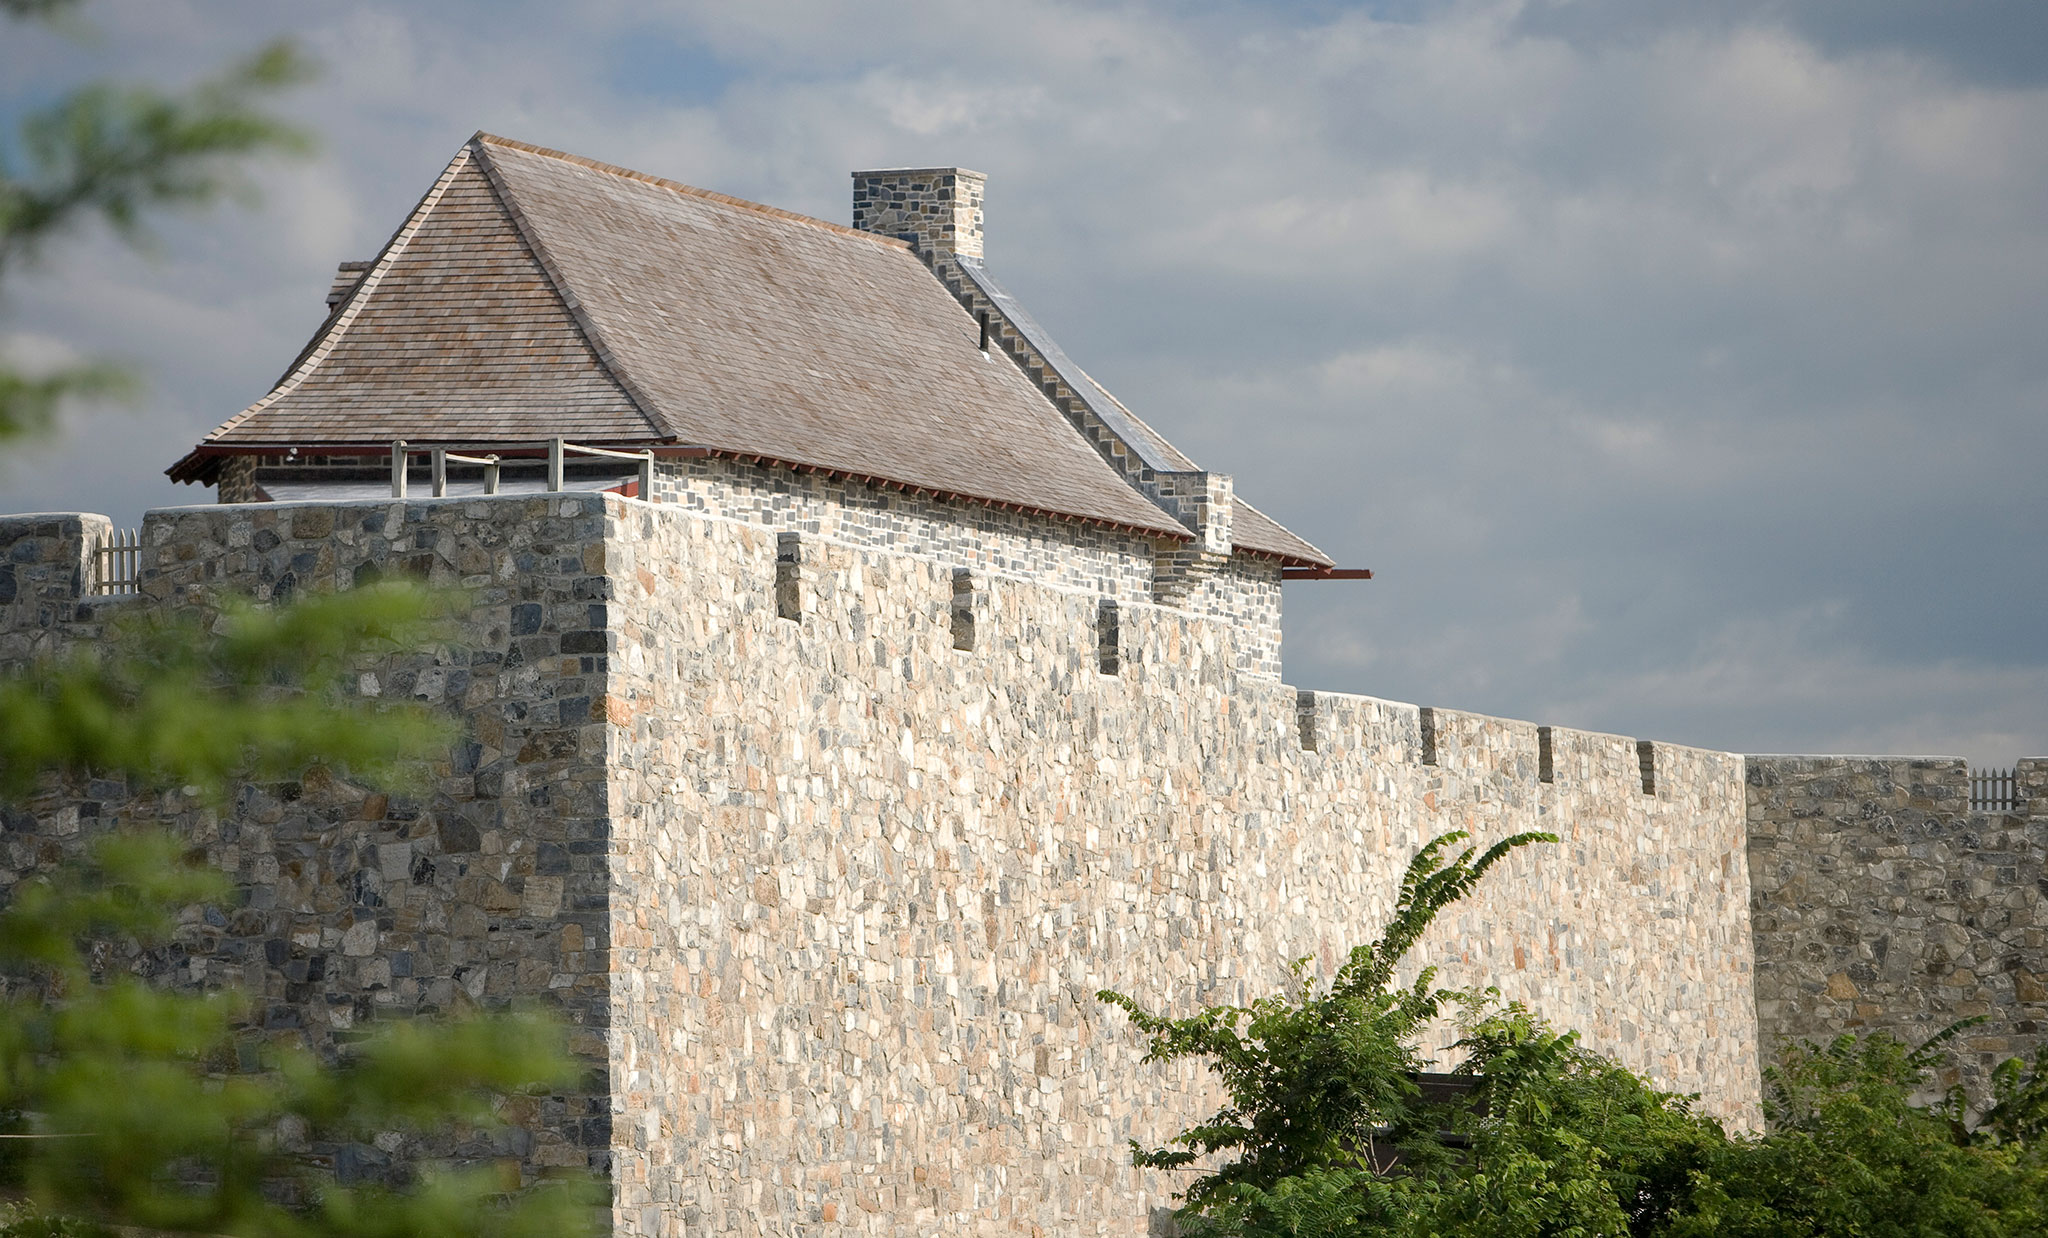 Fort Ticonderoga stonework